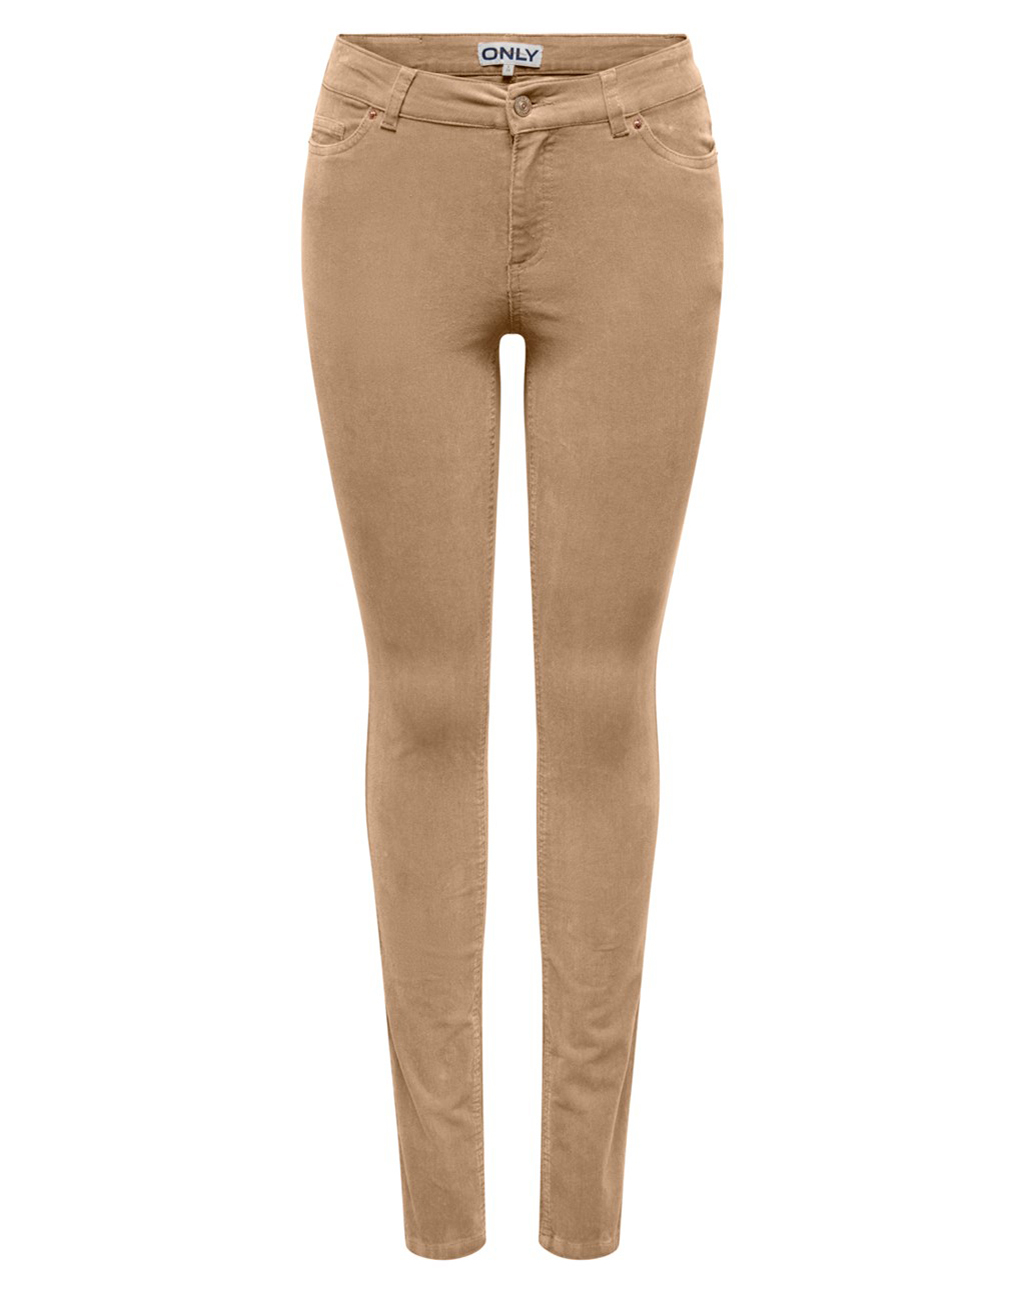 Only pantalones vaqueros de pana de mujer Blush mid waist skinny 15298649 beige